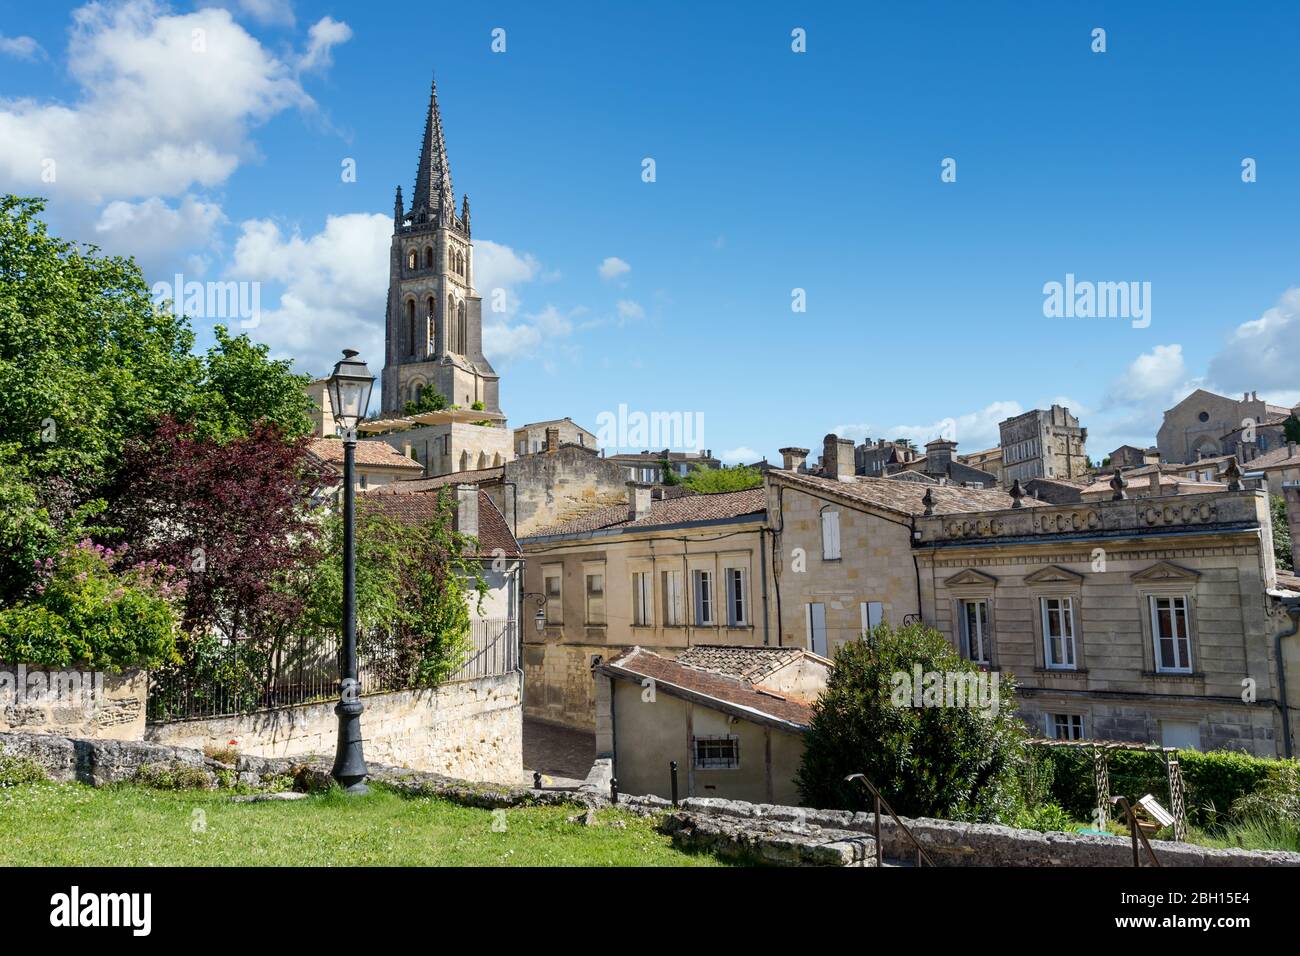 The village of Saint-Emilion, near Bordeaux in France Stock Photo